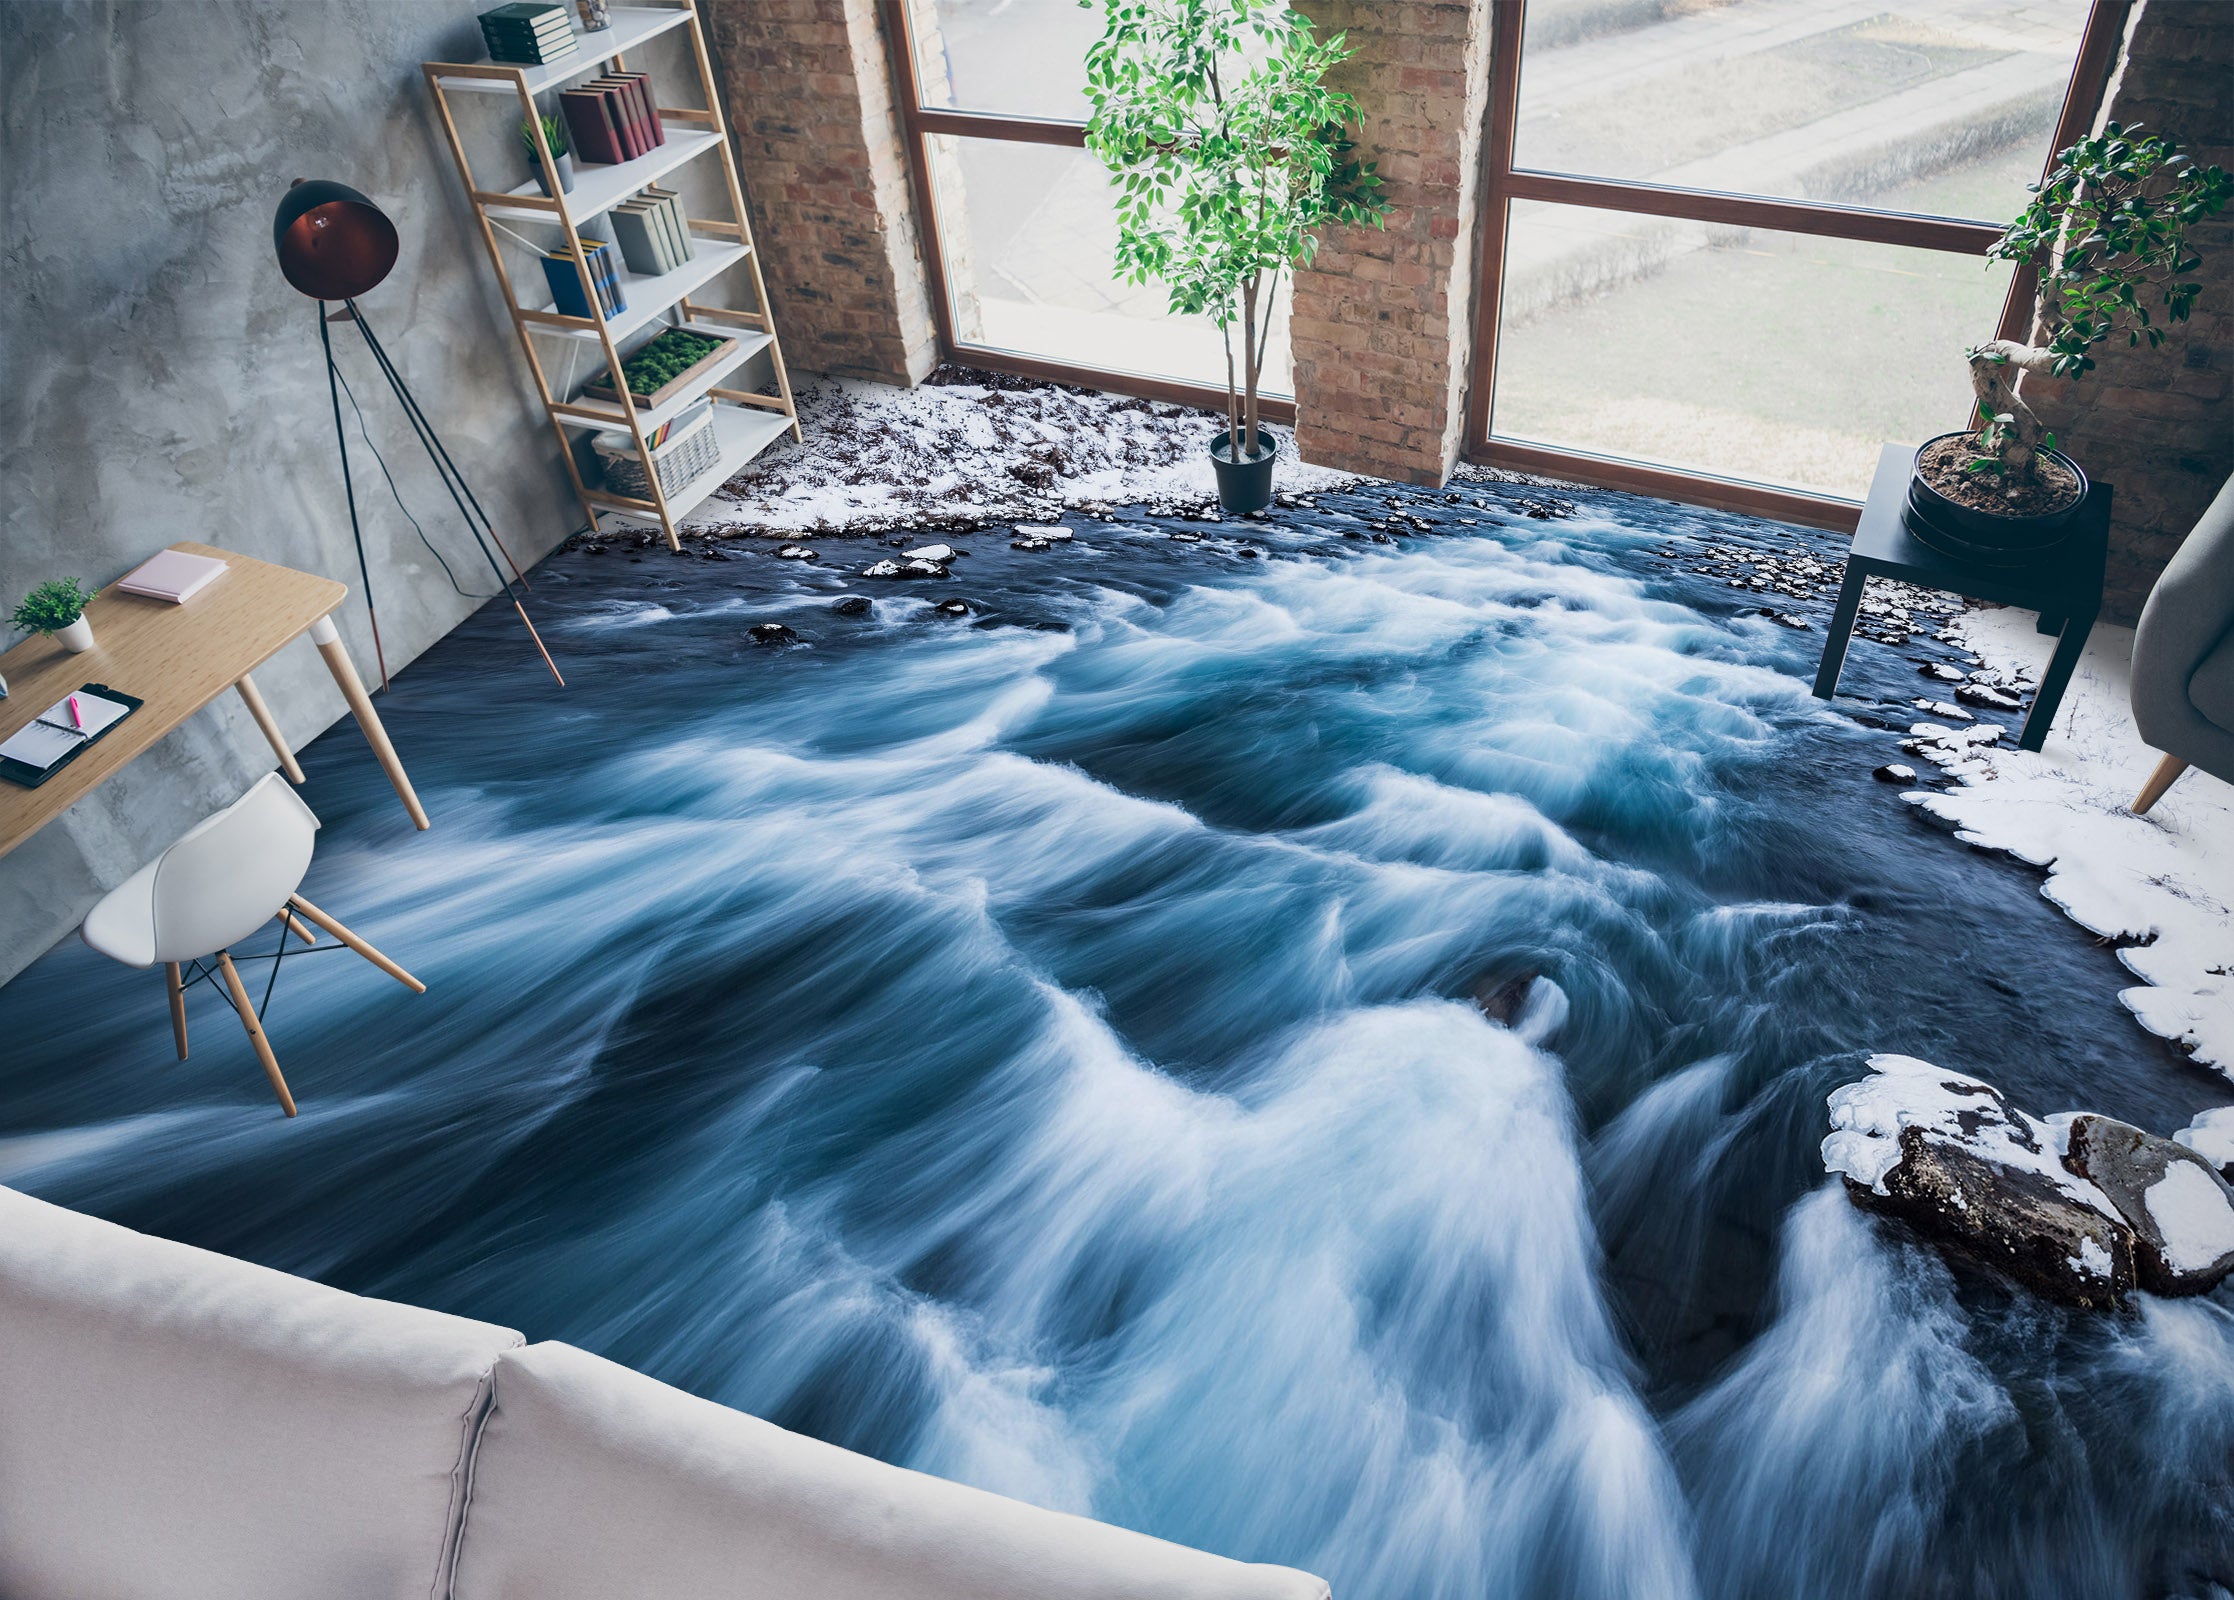 3D Deep Blue Turbulent Water 824 Floor Mural  Wallpaper Murals Rug & Mat Print Epoxy waterproof bath floor